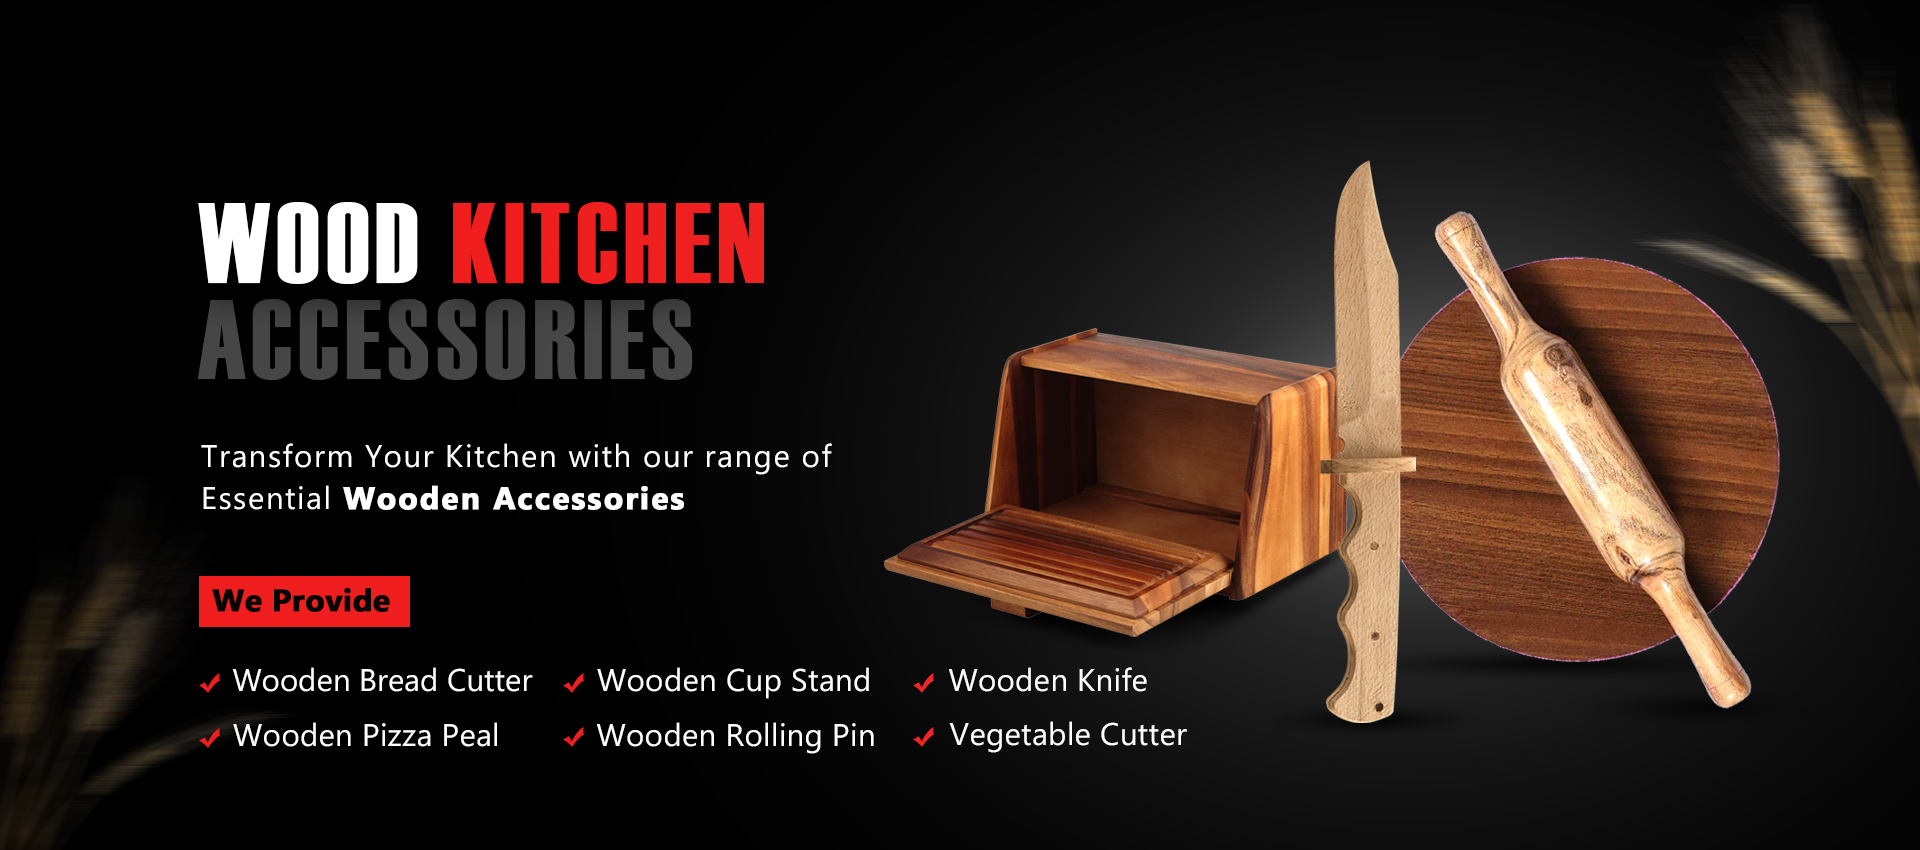 Wood Kithen Accessories